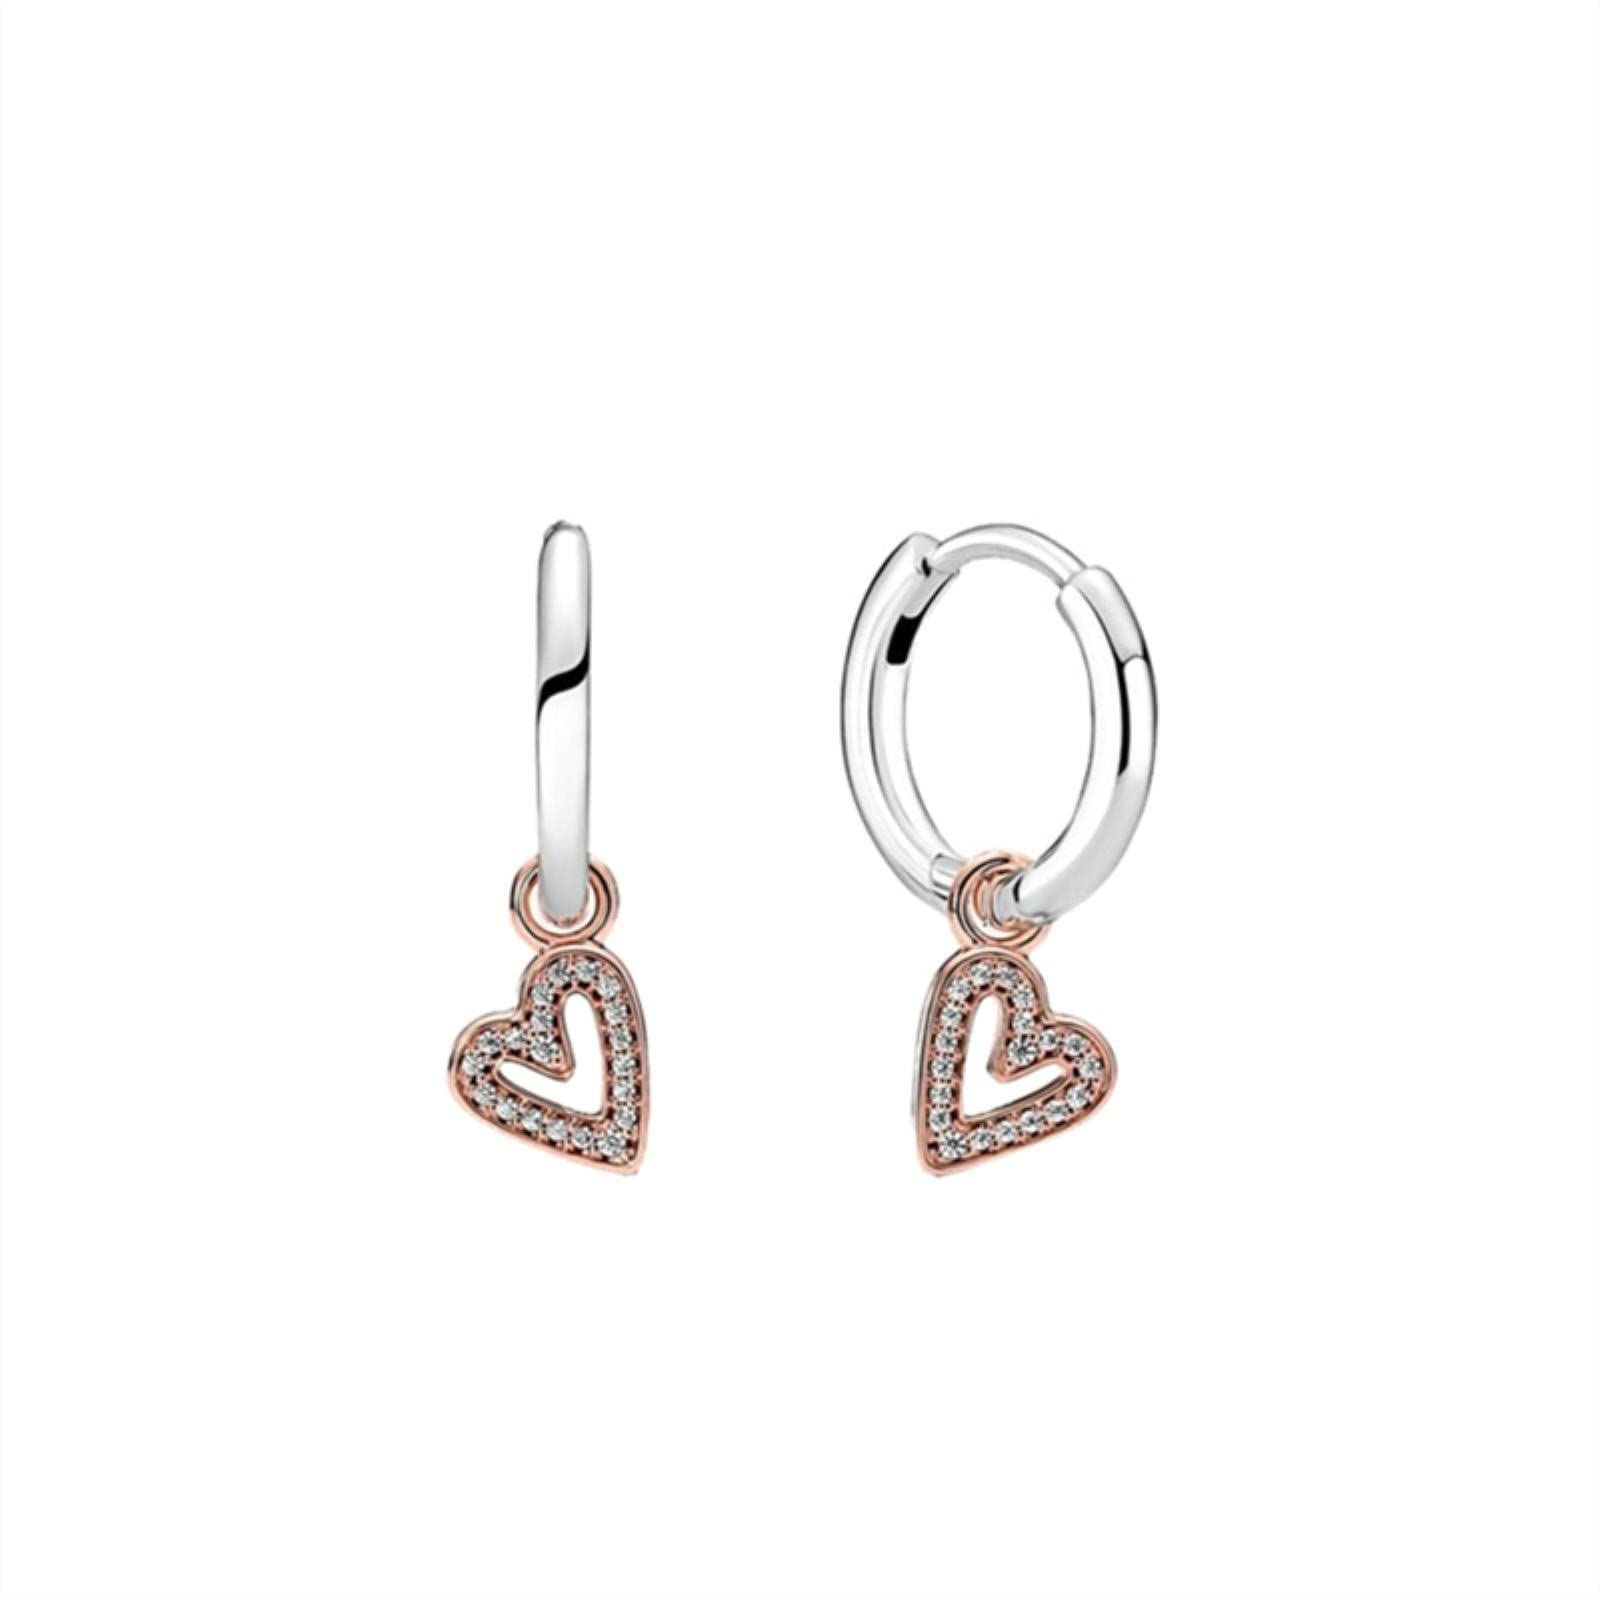 Mua Blue Charm Hoop Earrings for Women Pandora Earrings High Jewelry Gift  trên Amazon Nhật chính hãng 2023 | Giaonhan247